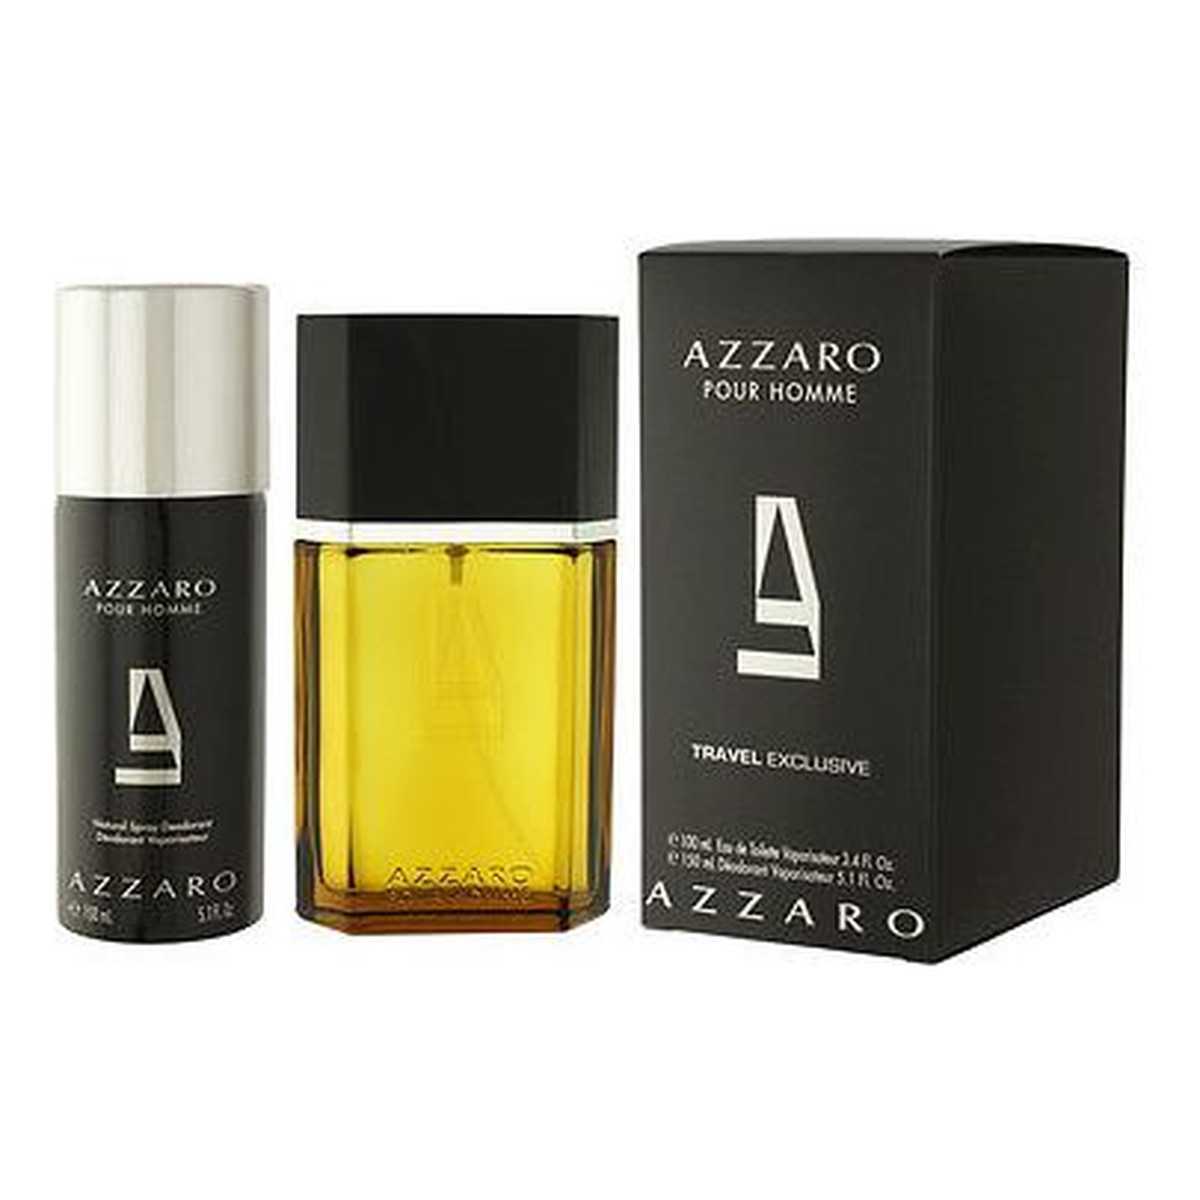 Azzaro Travel Exclusive Zestaw Woda toaletowa + Dezodorant 150ml